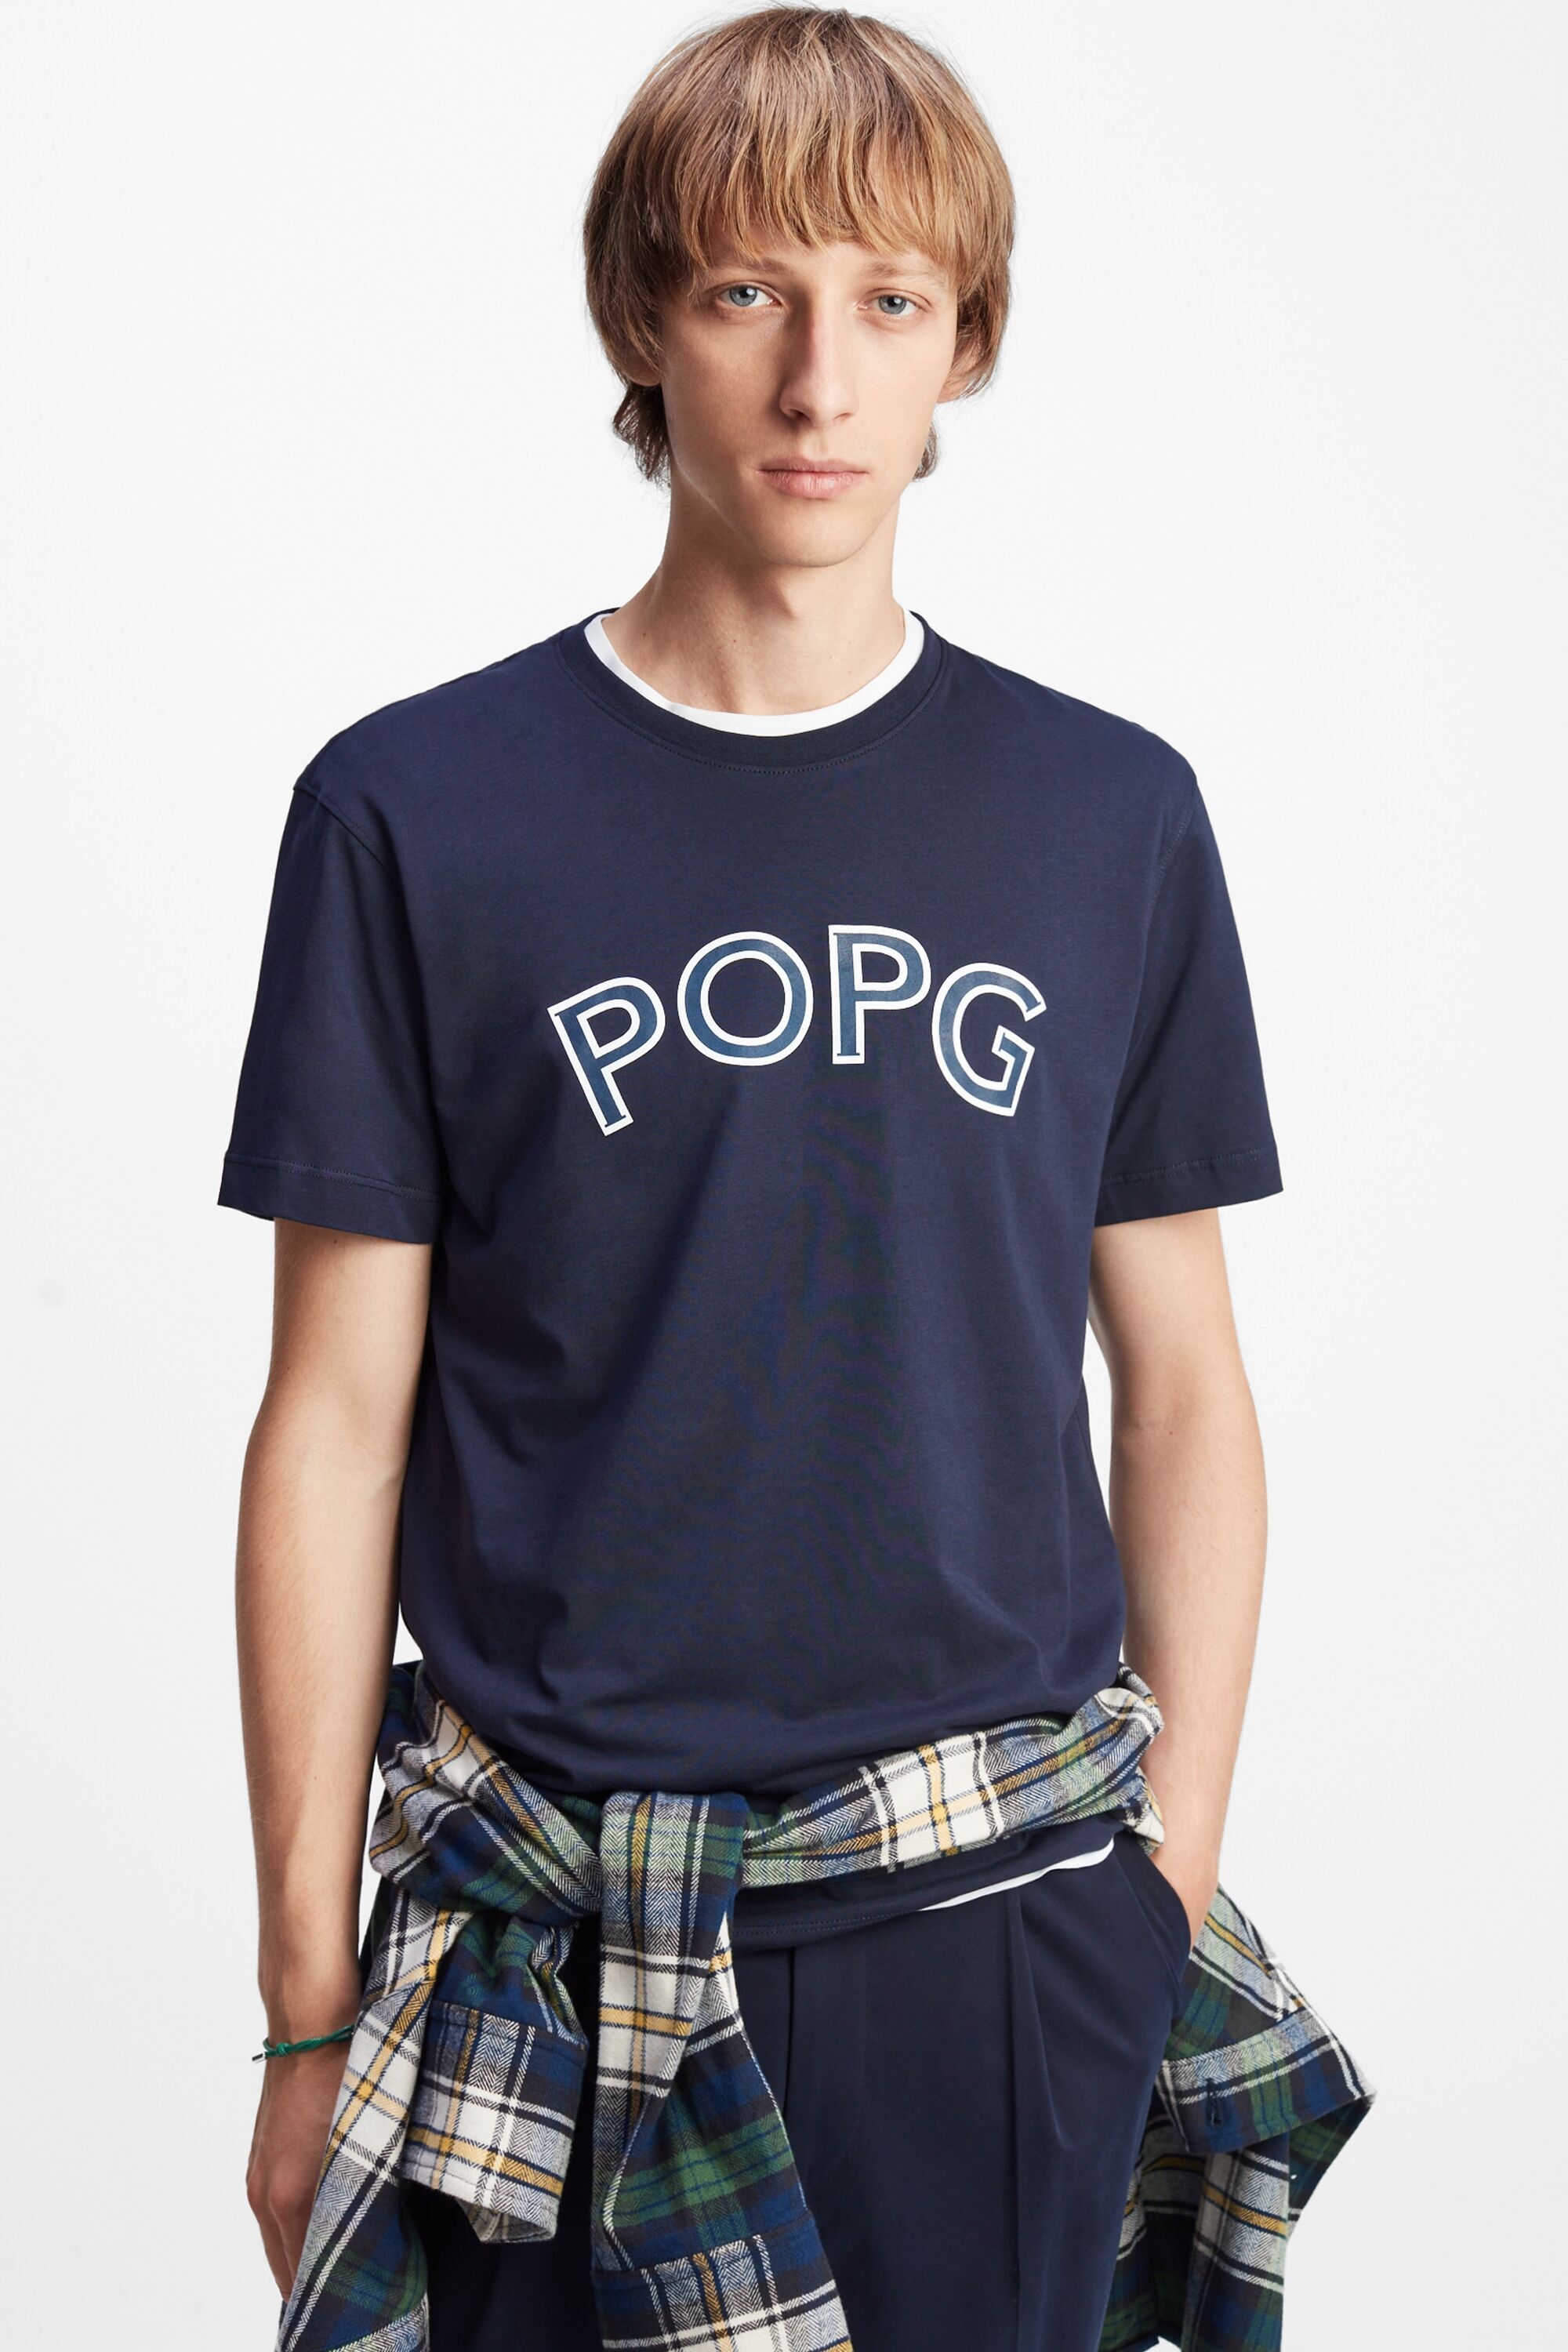 Camiseta estampado Pop PG